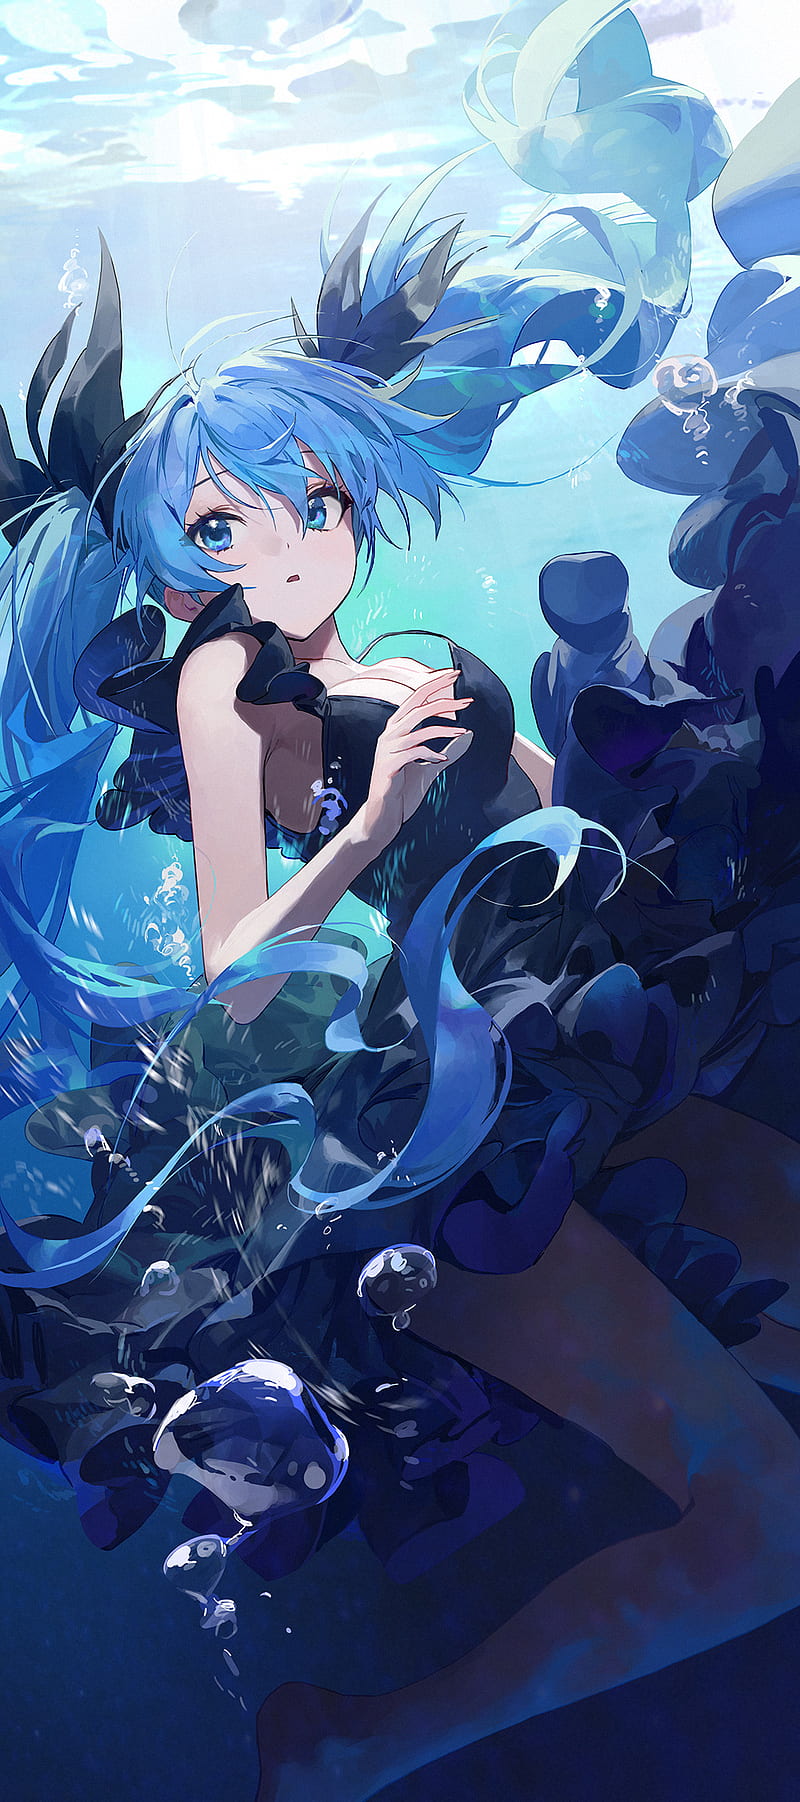 Idol - Zerochan Anime Image Board